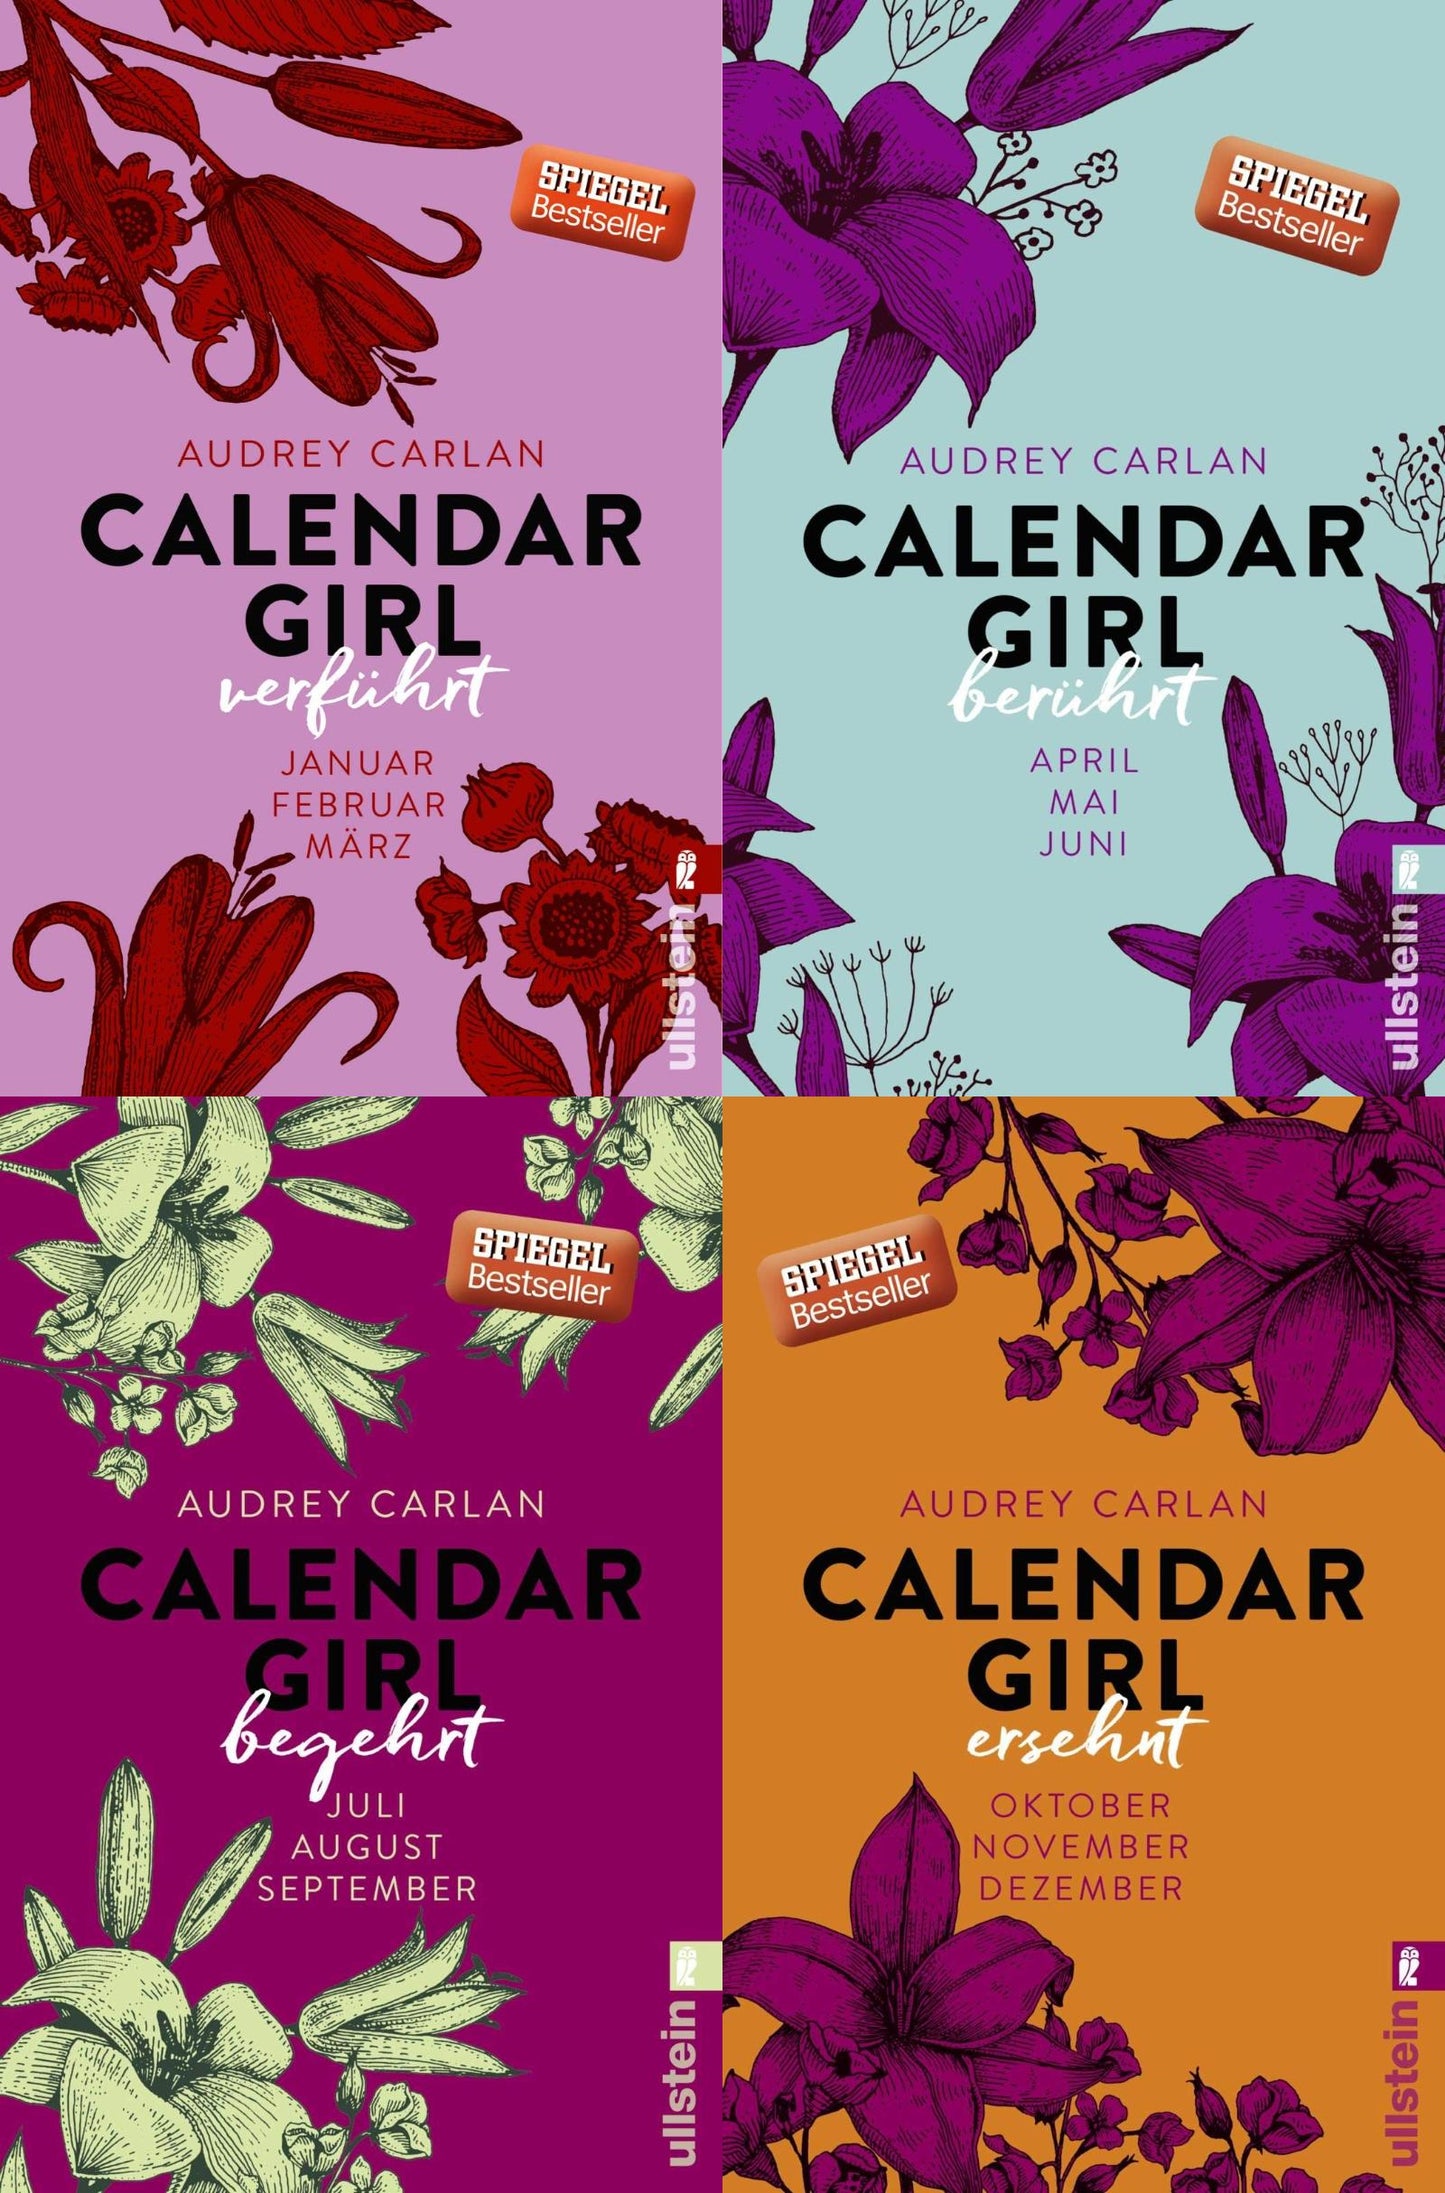 Calendar Girls-Serie Band 1-4 plus 1 exklusives Postkartenset